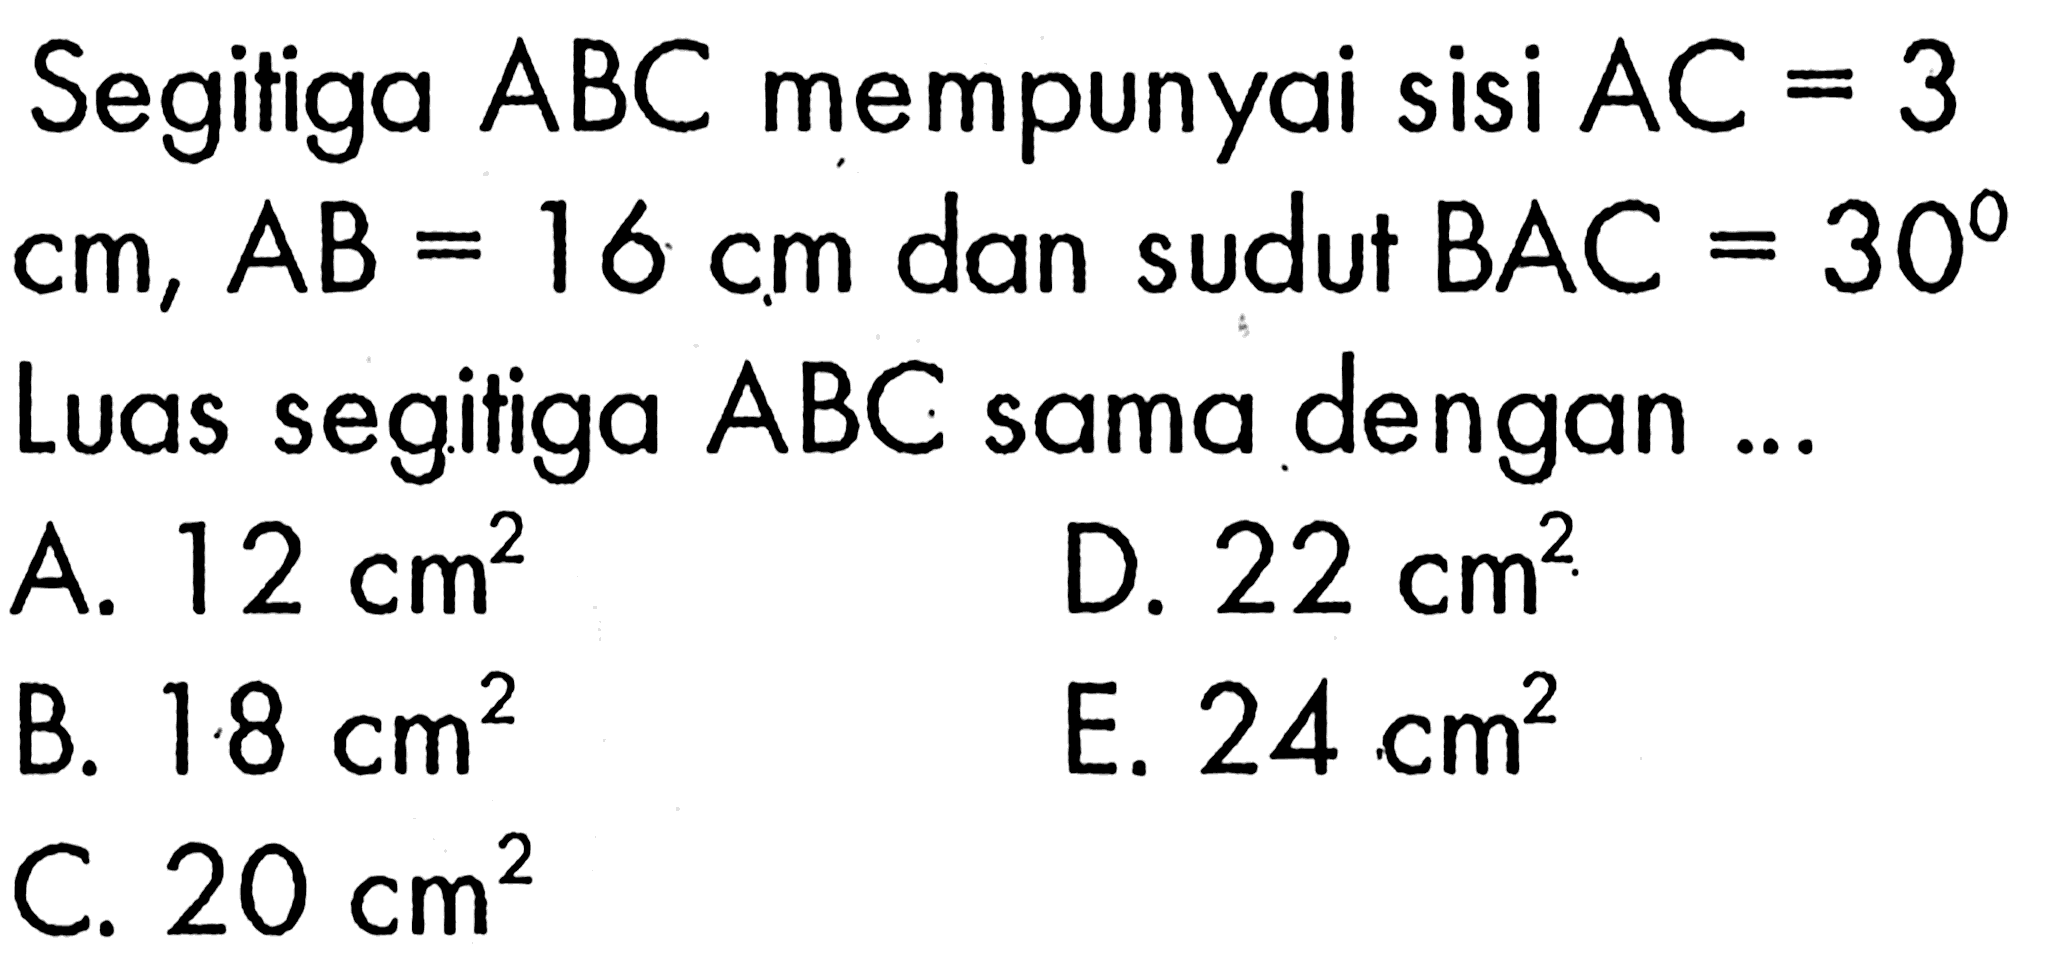 Segitiga ABC mempunyai sisi AC=3 cm, AB=16 cm dan sudut BAC=30 Luas segitiga ABC sama dengan ...